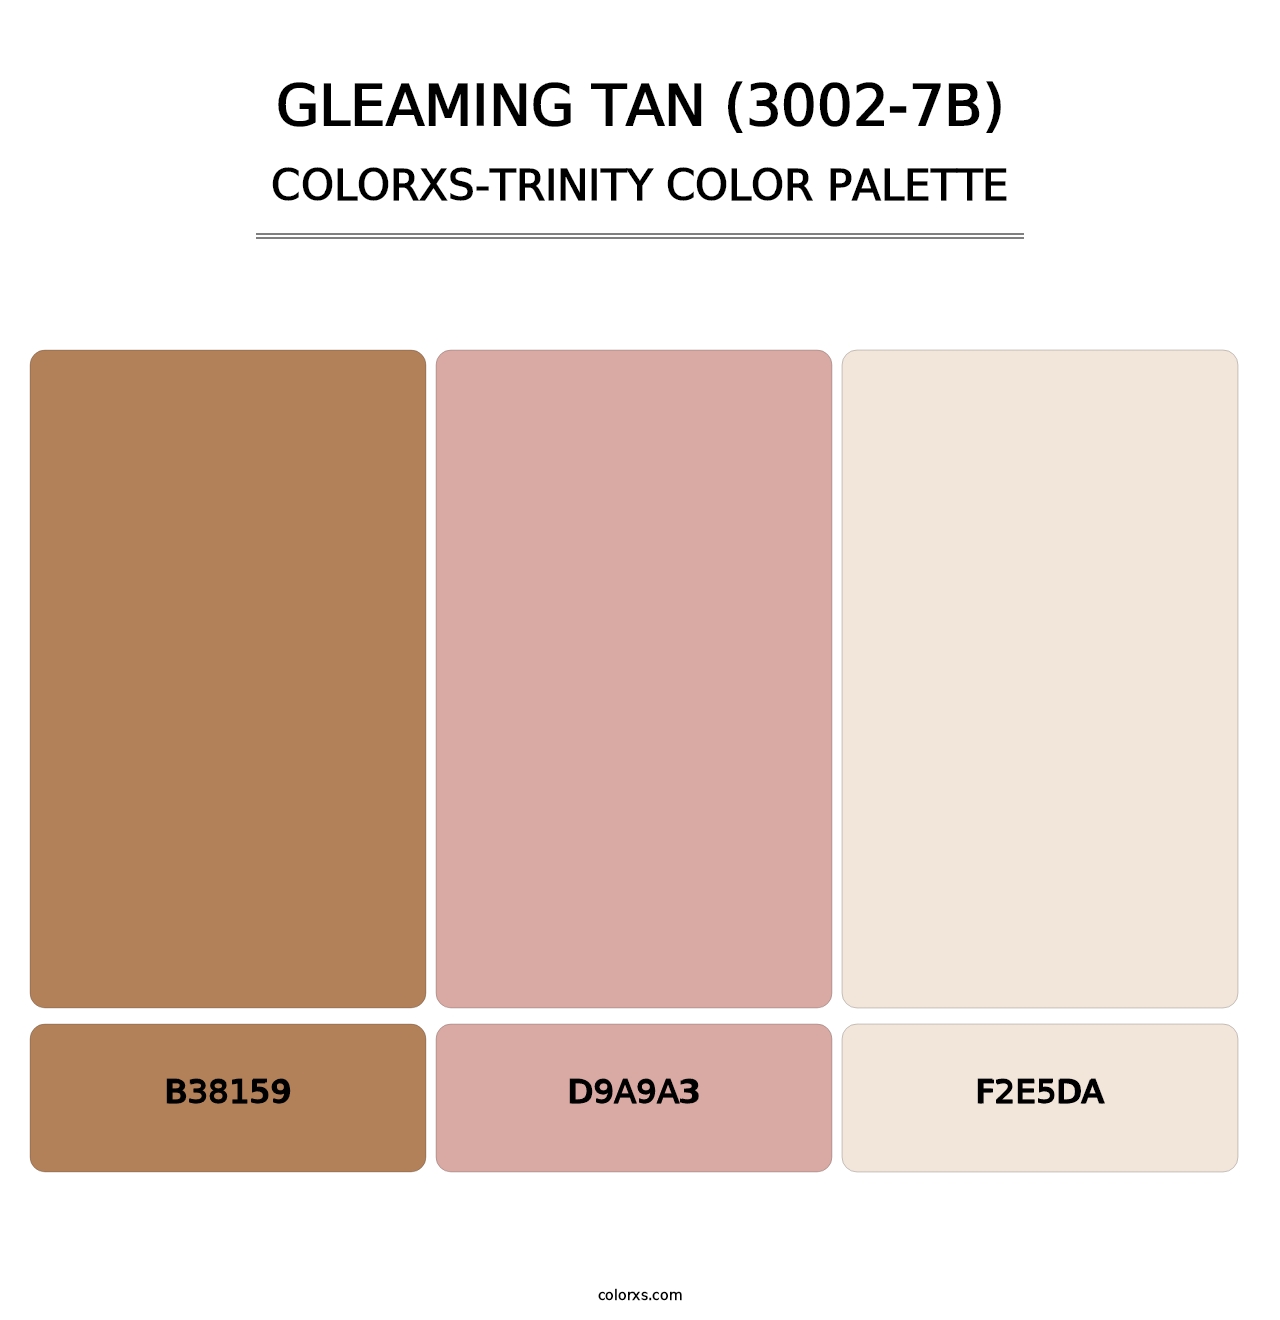 Gleaming Tan (3002-7B) - Colorxs Trinity Palette